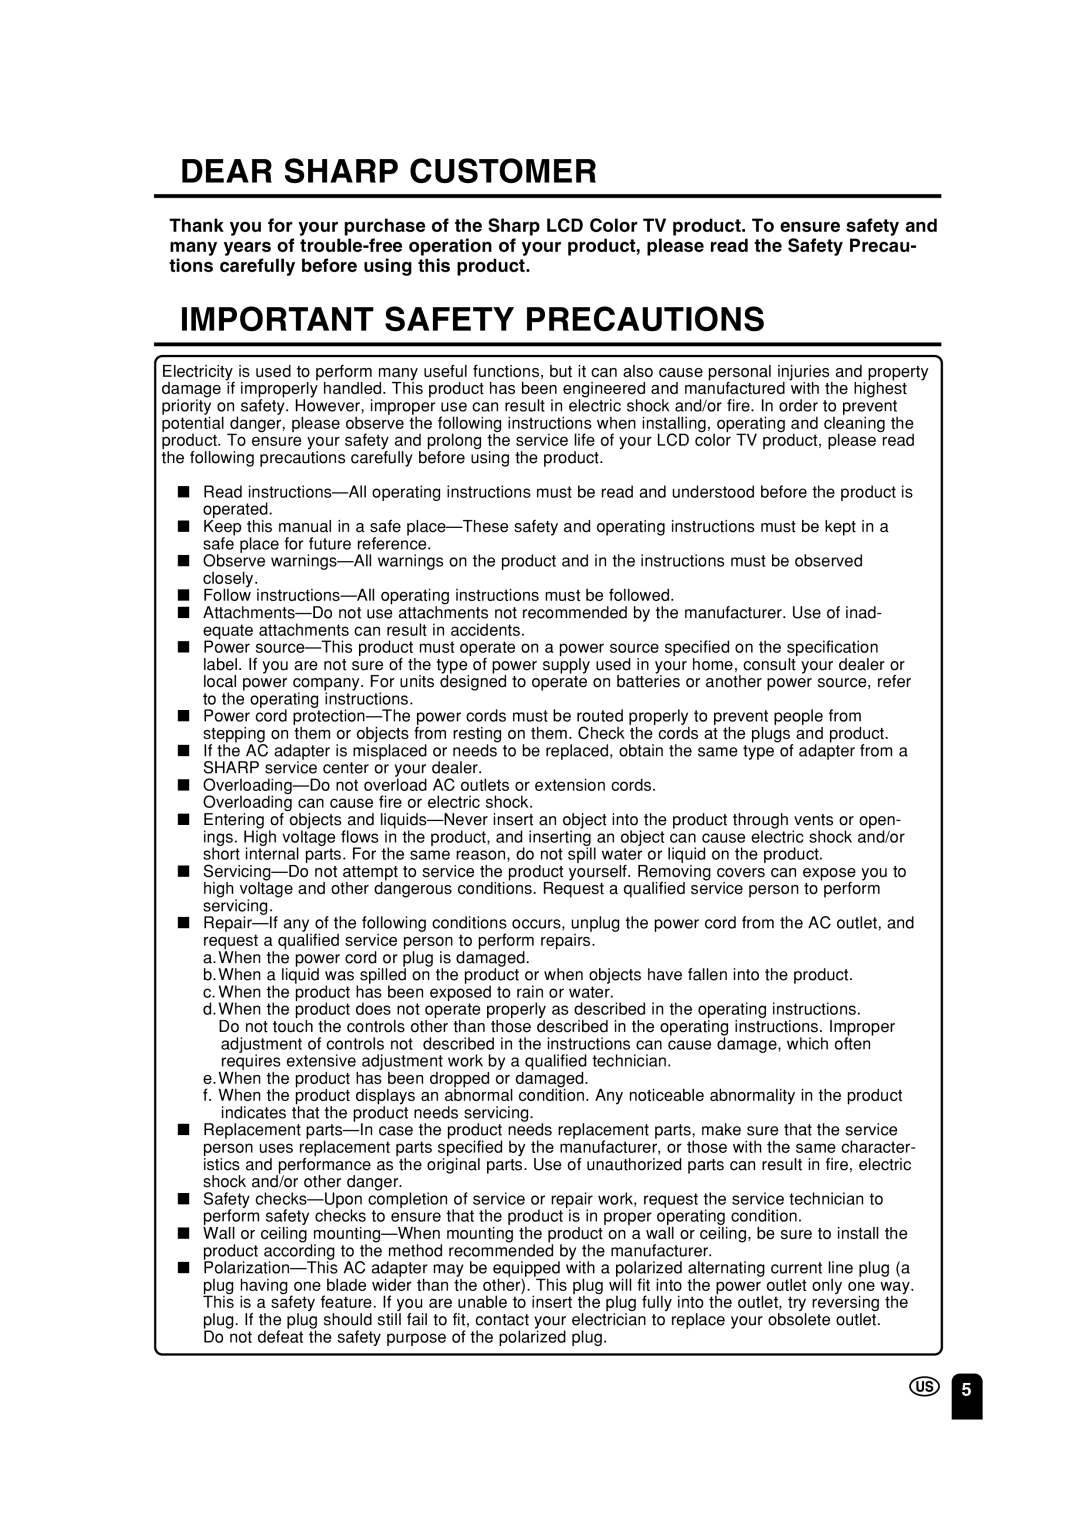 Sharp LC 15A2U operation manual Dear Sharp Customer, Important Safety Precautions 